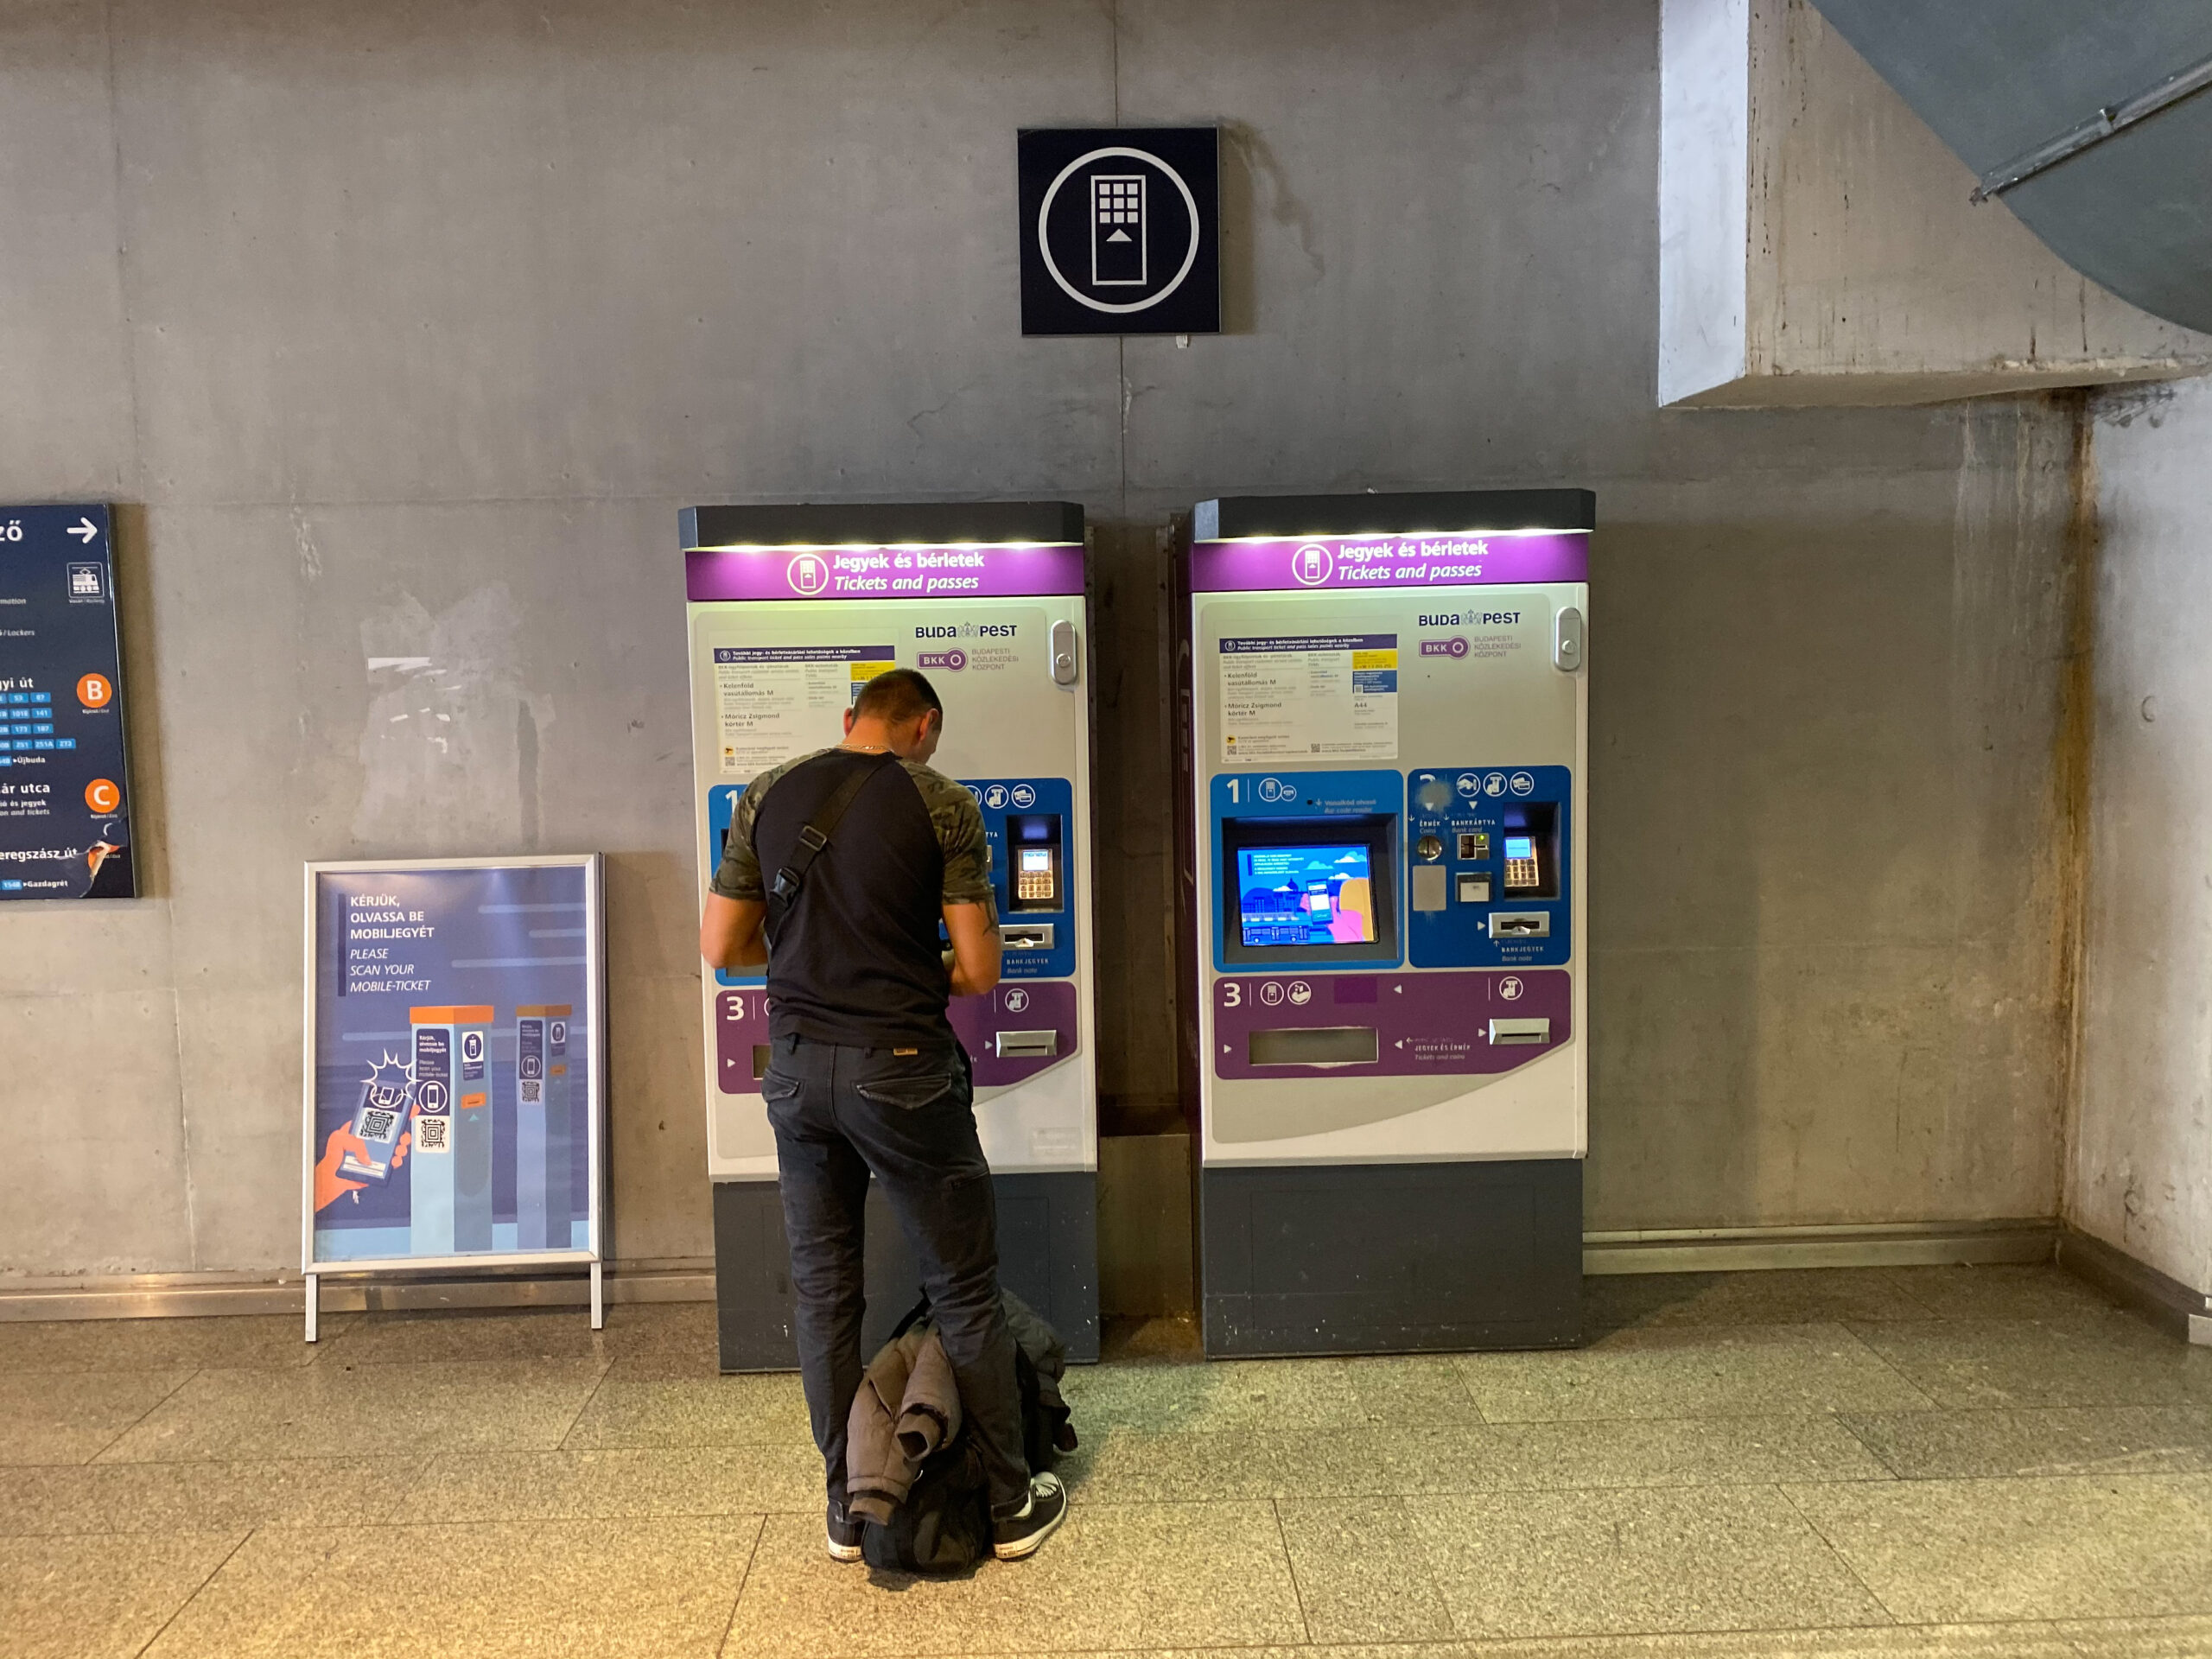 Ticket machine at Kelenföld railway station